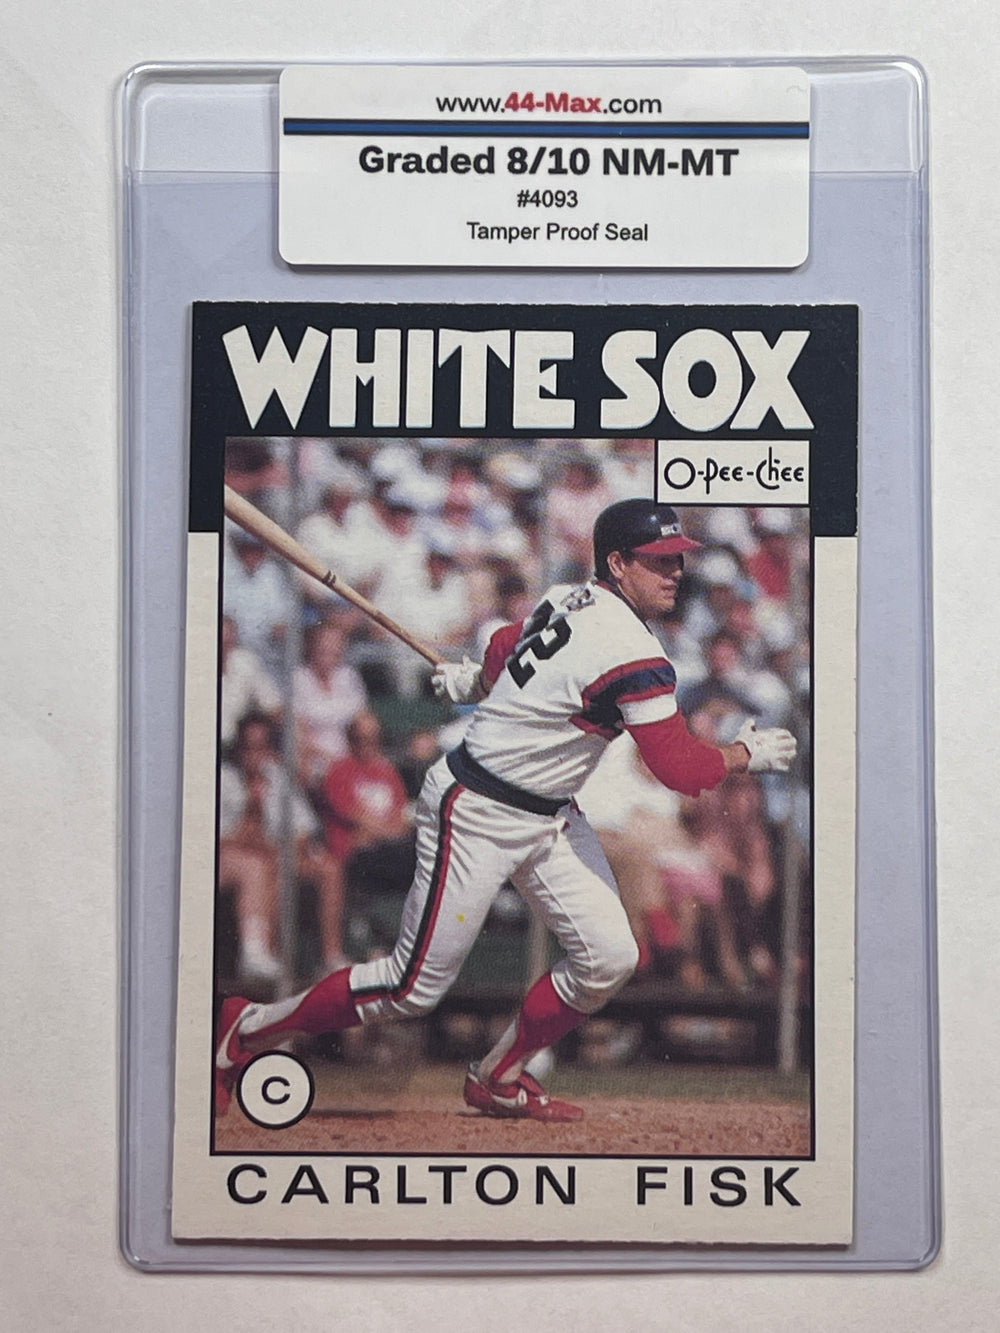 Carlton Fisk 1986 O-Pee-Chee Baseball Card. 44-Max 8/10 NM-MT #4093